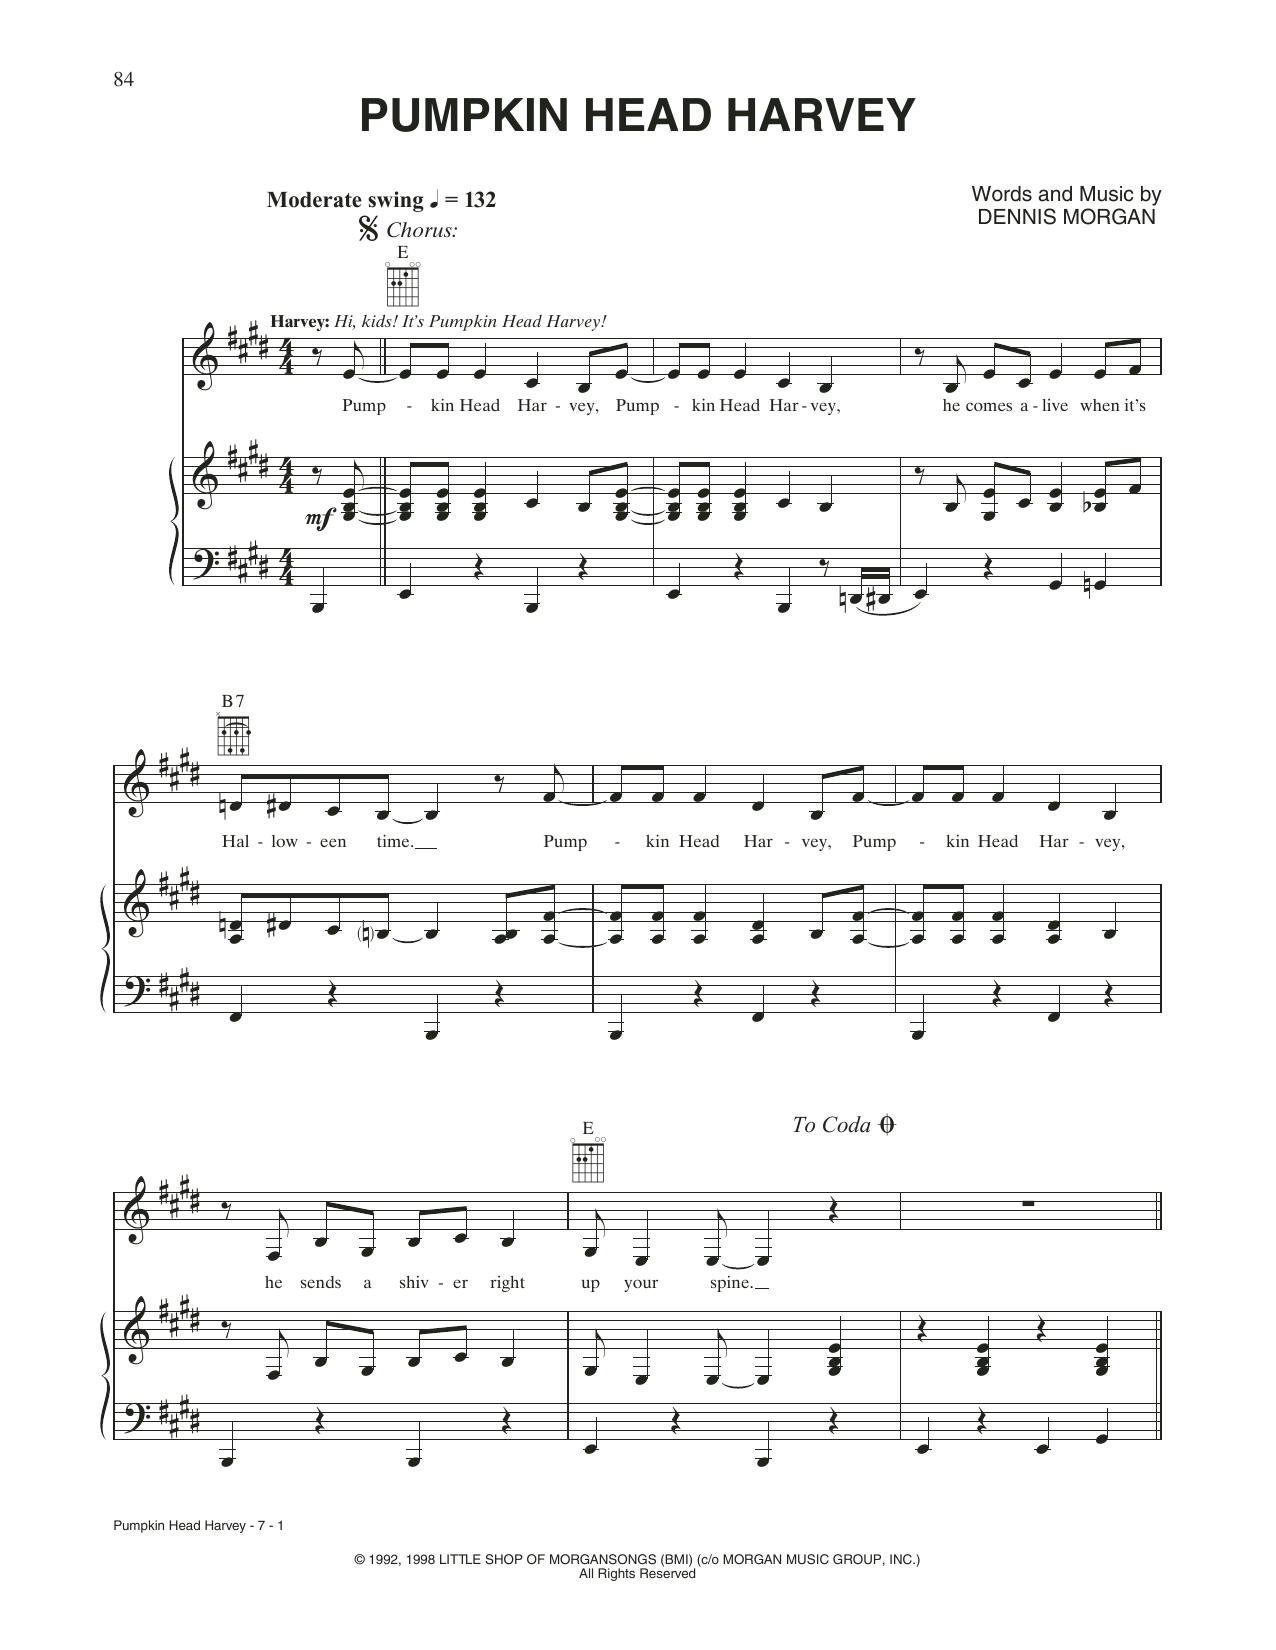 Dennis Morgan Pumpkin Head Harvey Sheet Music Notes & Chords for Piano, Vocal & Guitar Chords (Right-Hand Melody) - Download or Print PDF